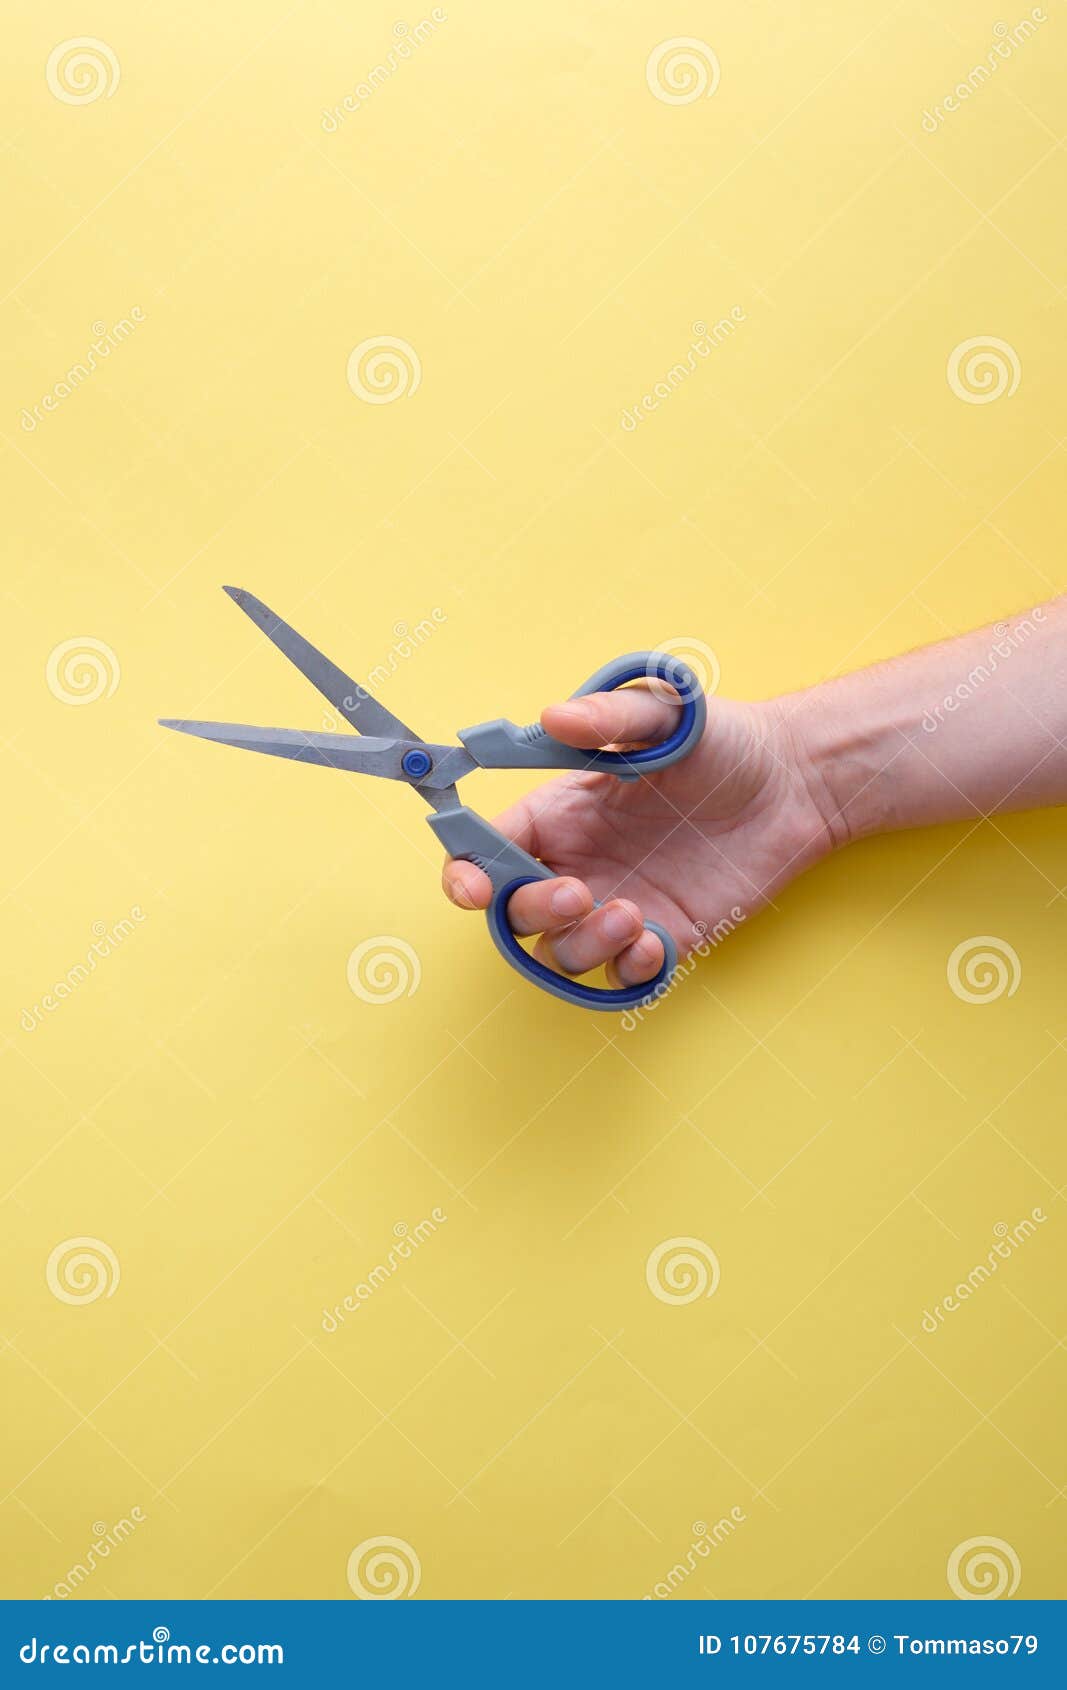 Hand Holding Scissors on Yellow Background Stock Photo - Image of ...